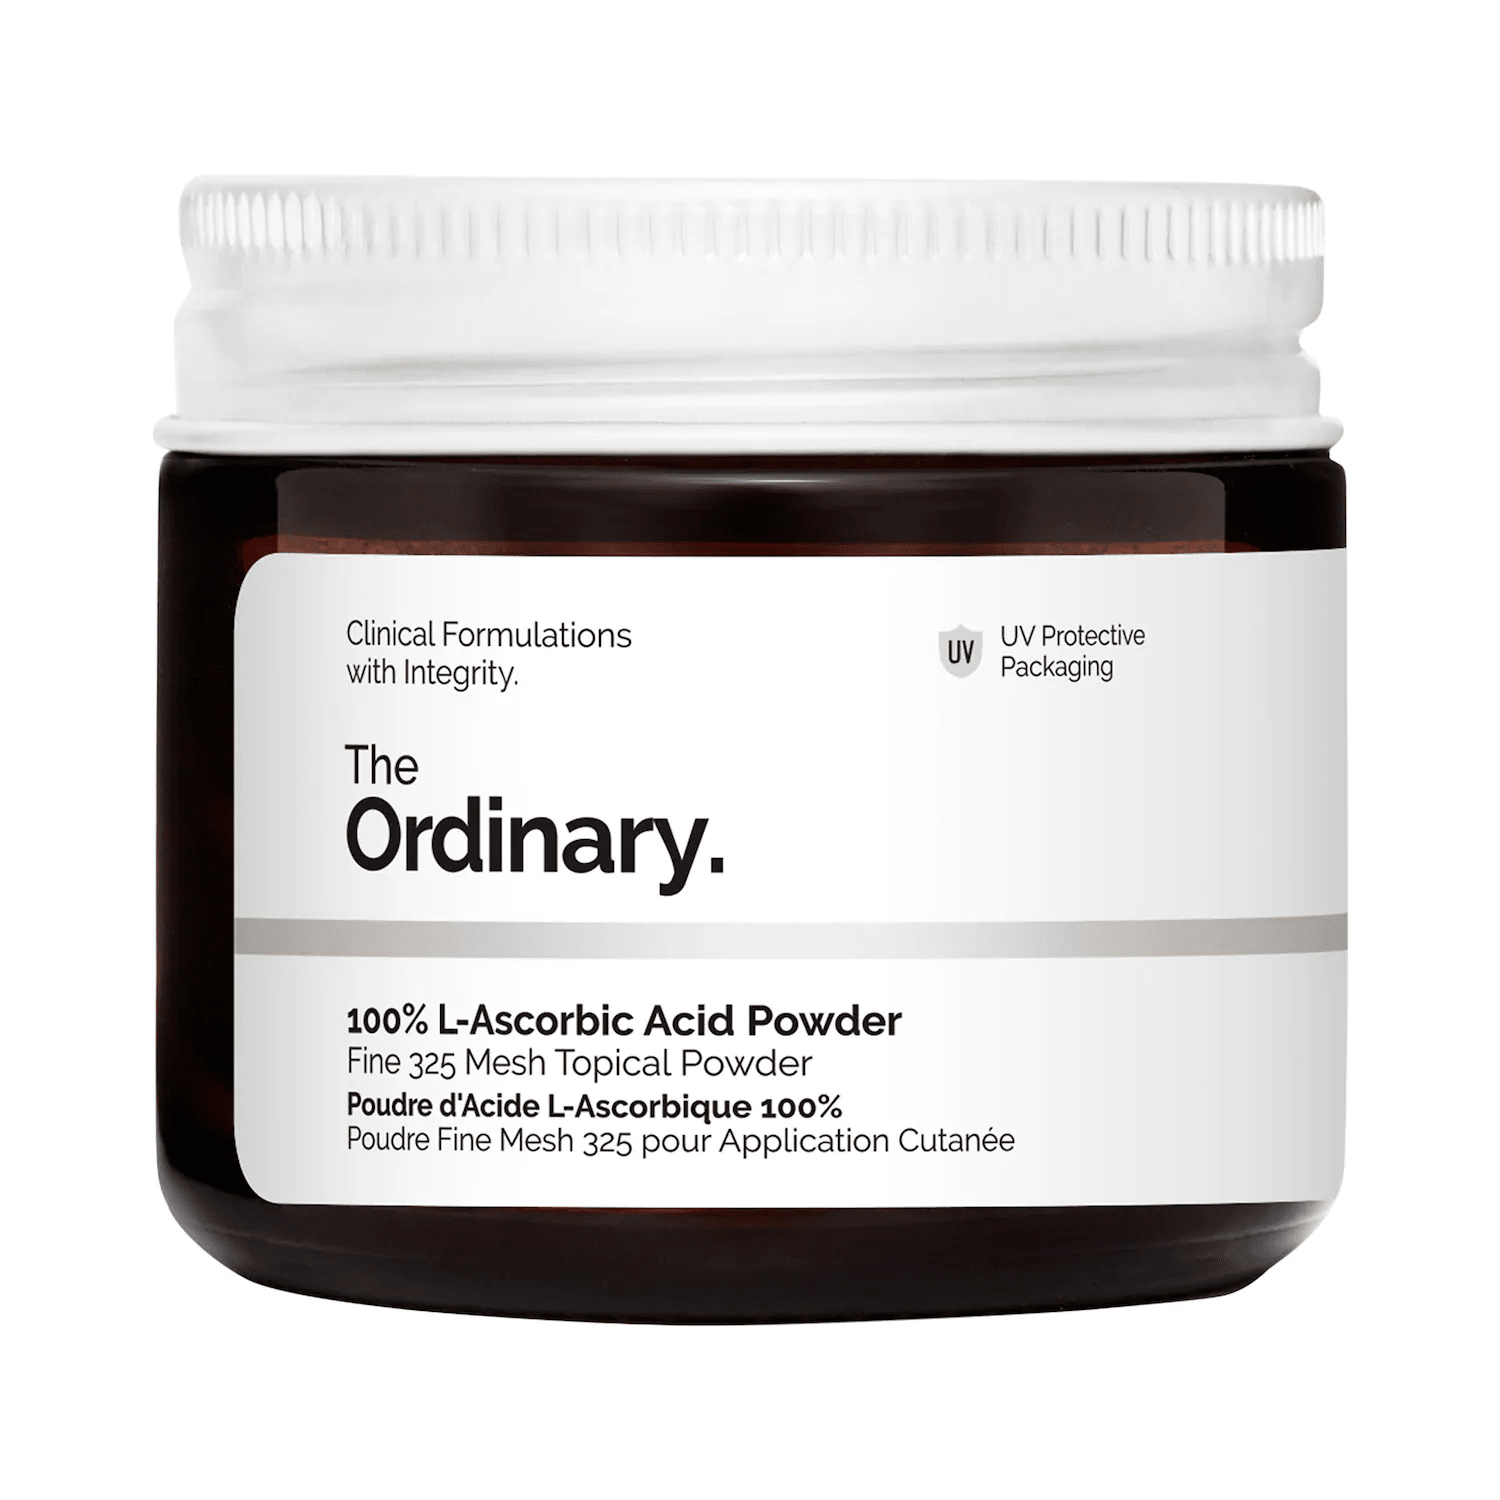 The Ordinary México - 100% L-Ascorbic Acid Powder | Beauty Box Mérida